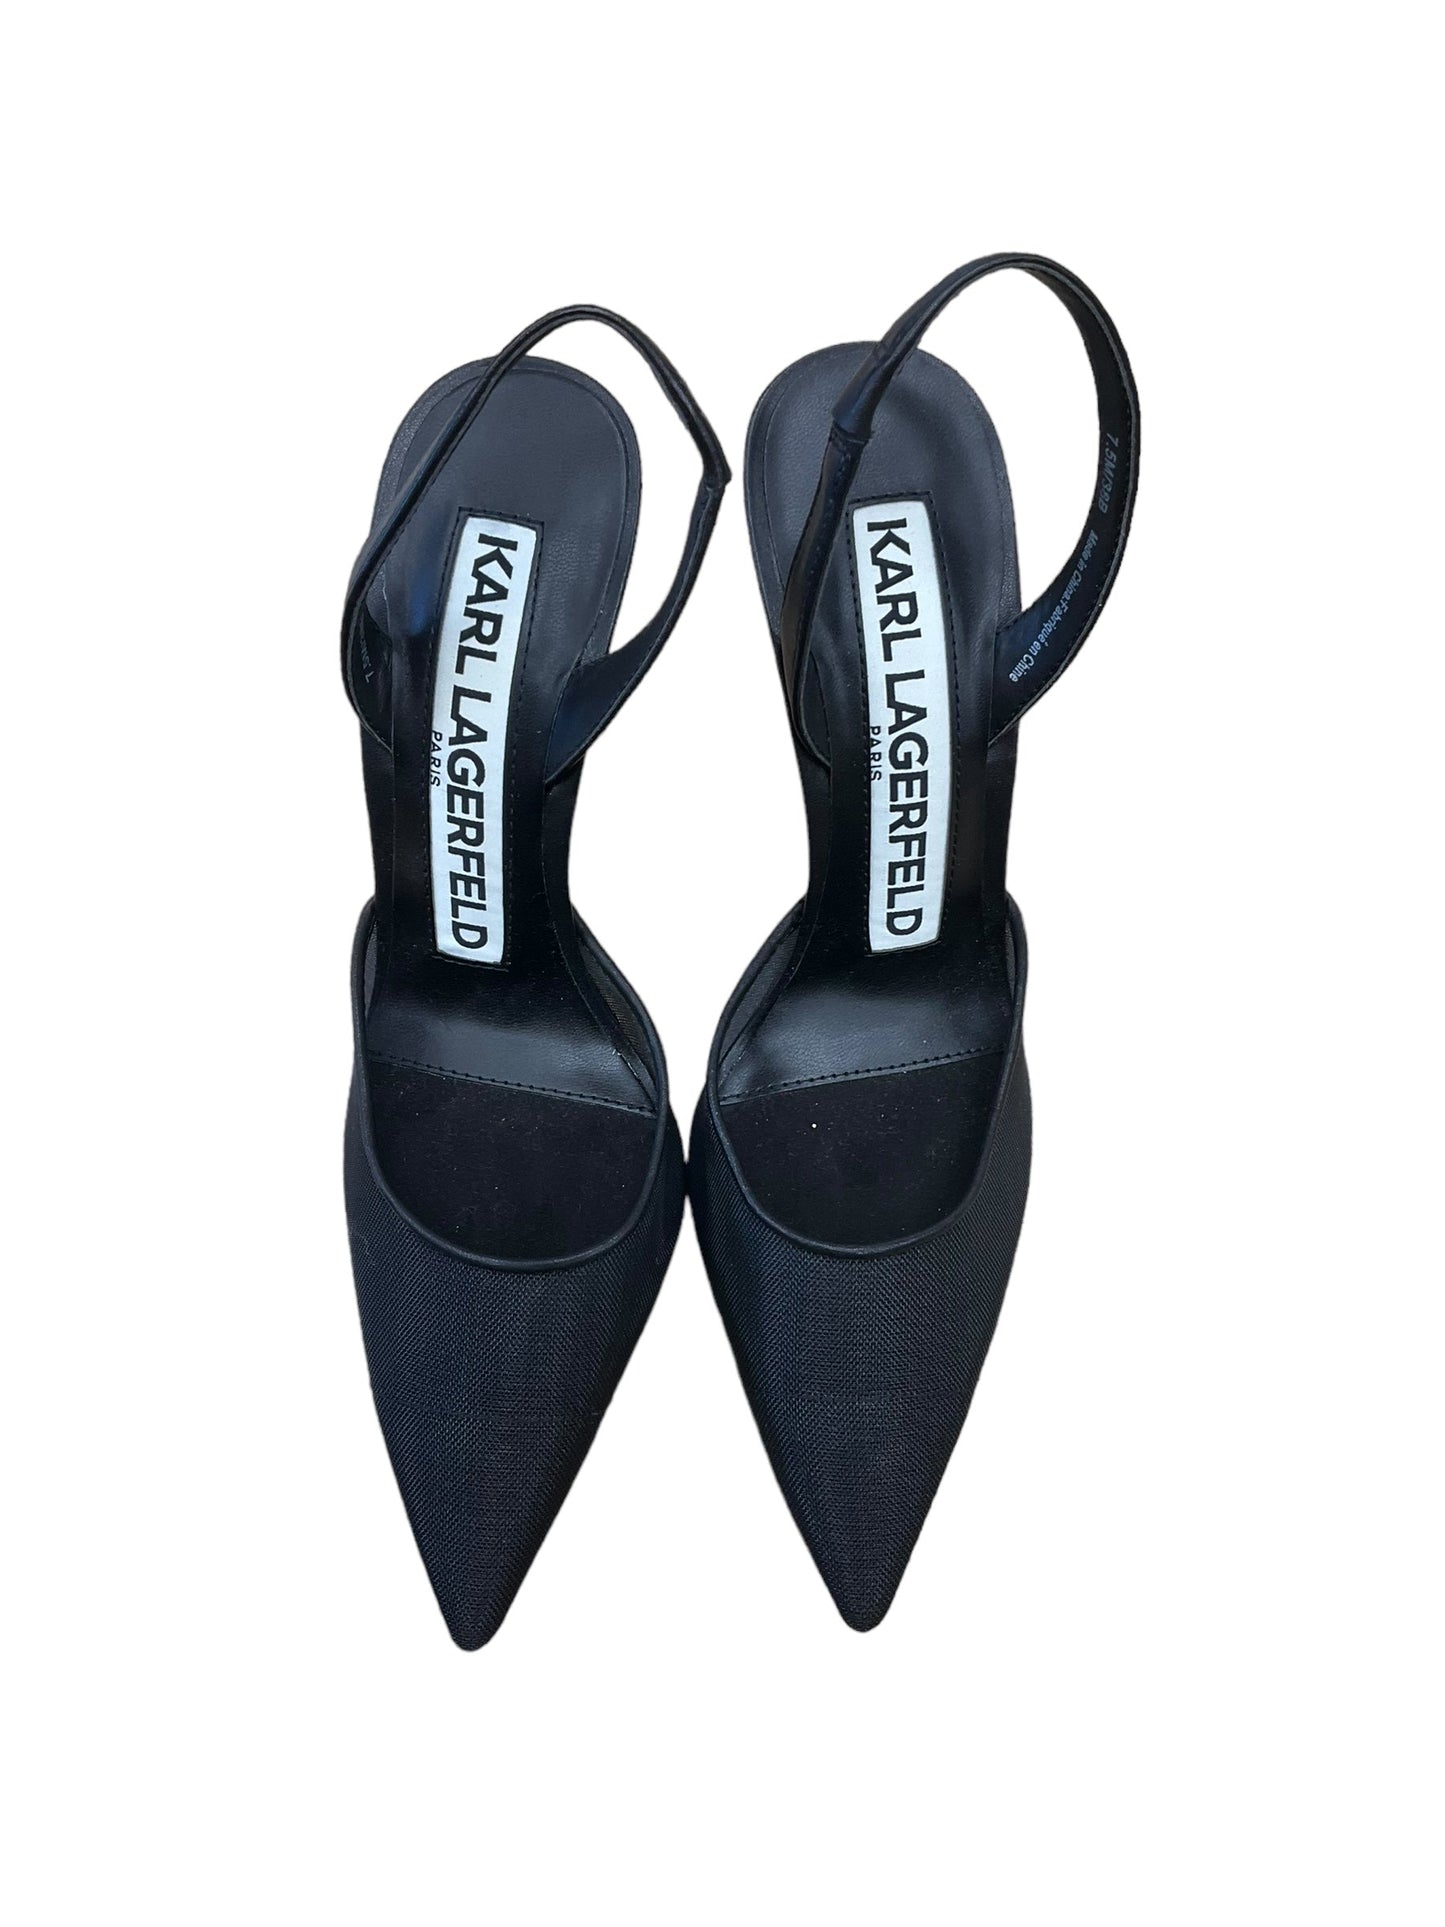 Black Shoes Heels Stiletto Karl Lagerfeld, Size 7.5